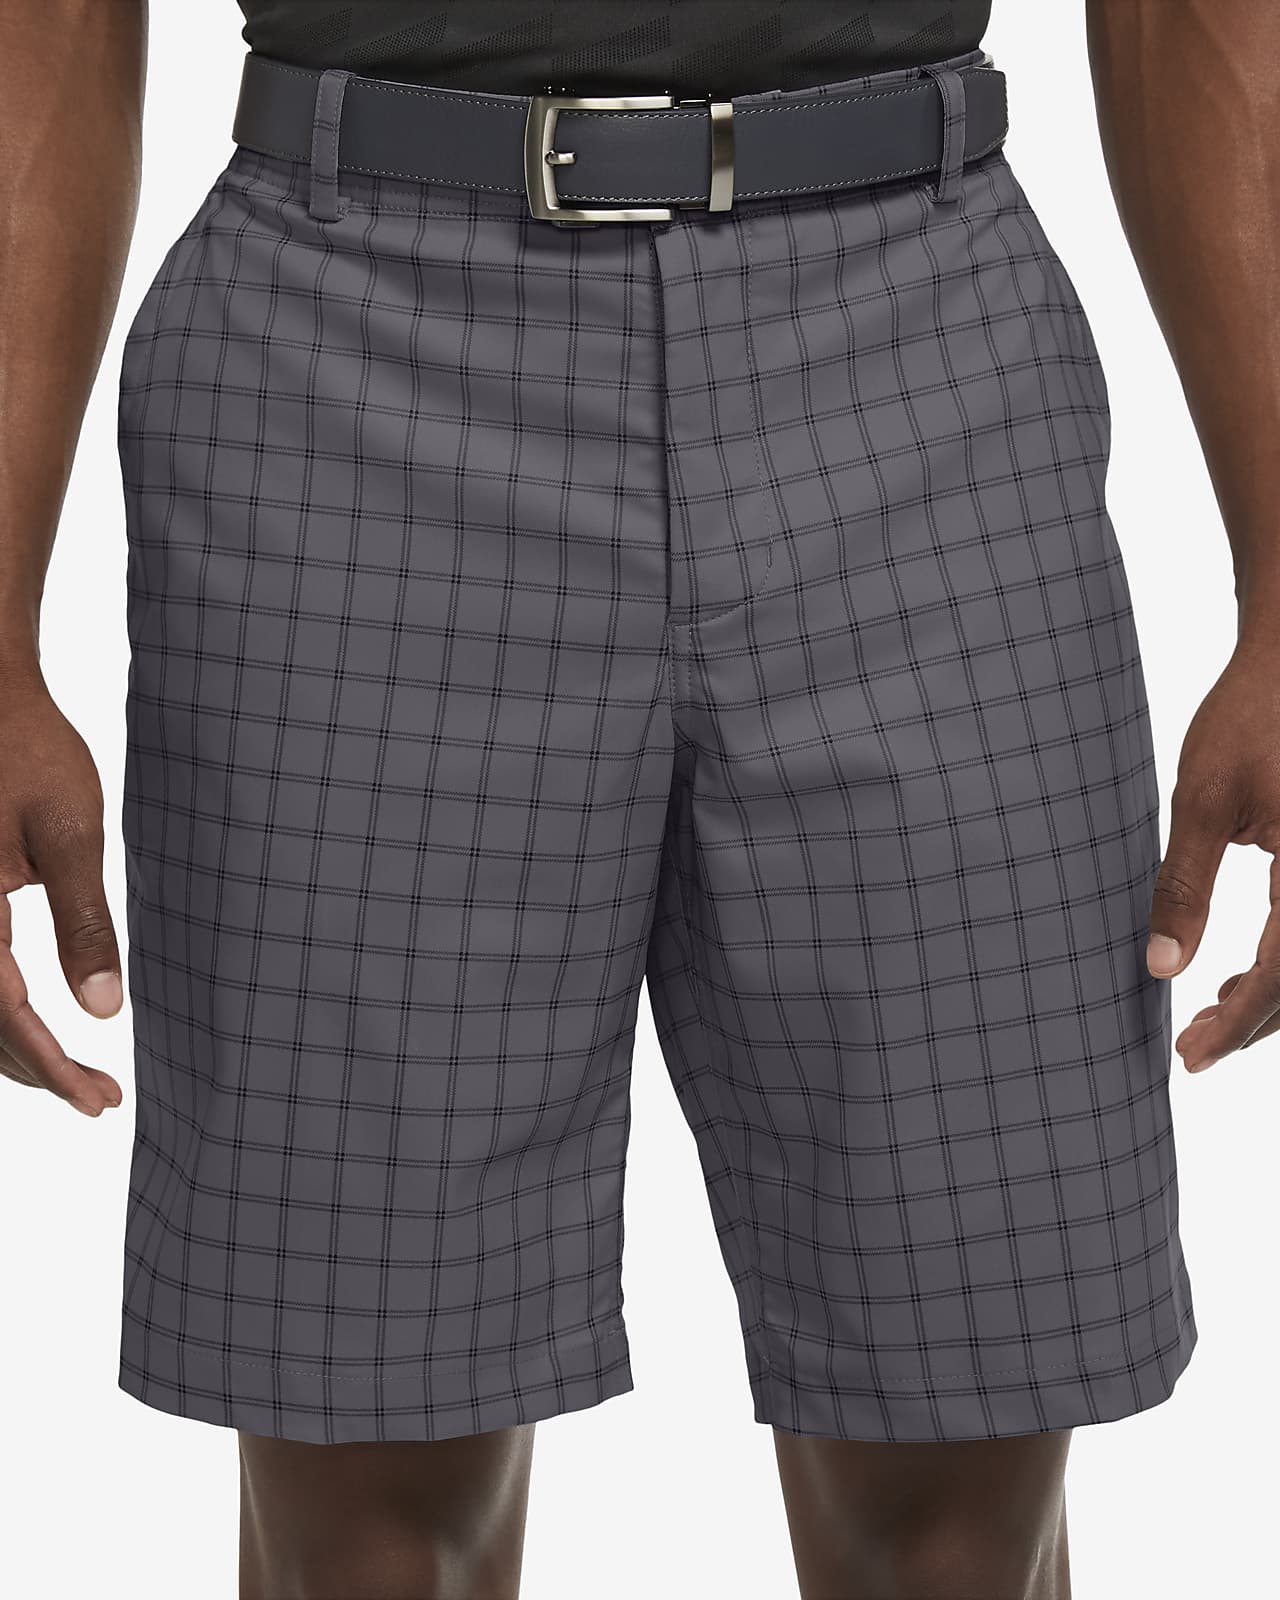 Nike Dri-FIT Men's Plaid Golf Shorts